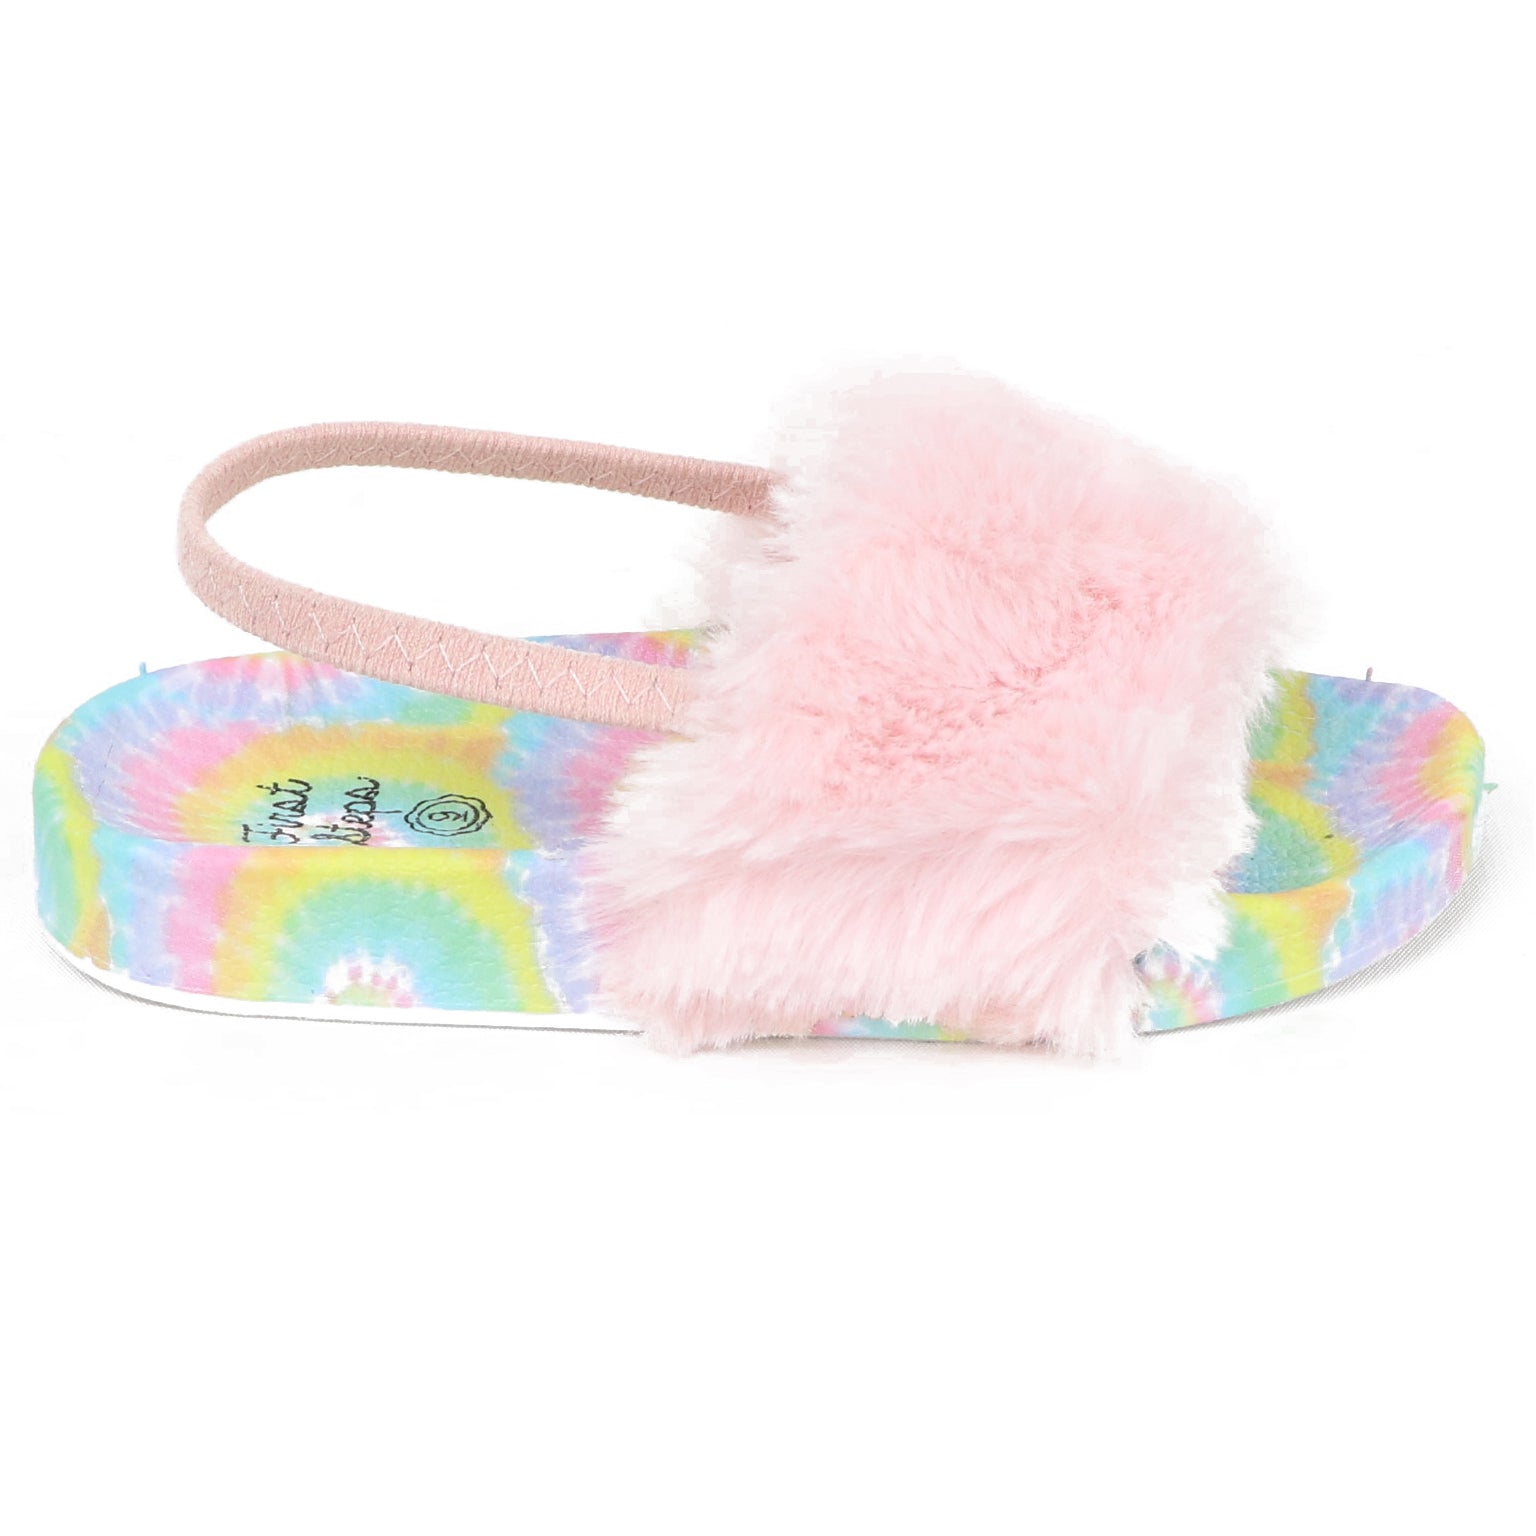 Stepping Stones Baby Girls and Toddler Girls Shoe Size 4-6 Fur Slide Sandal